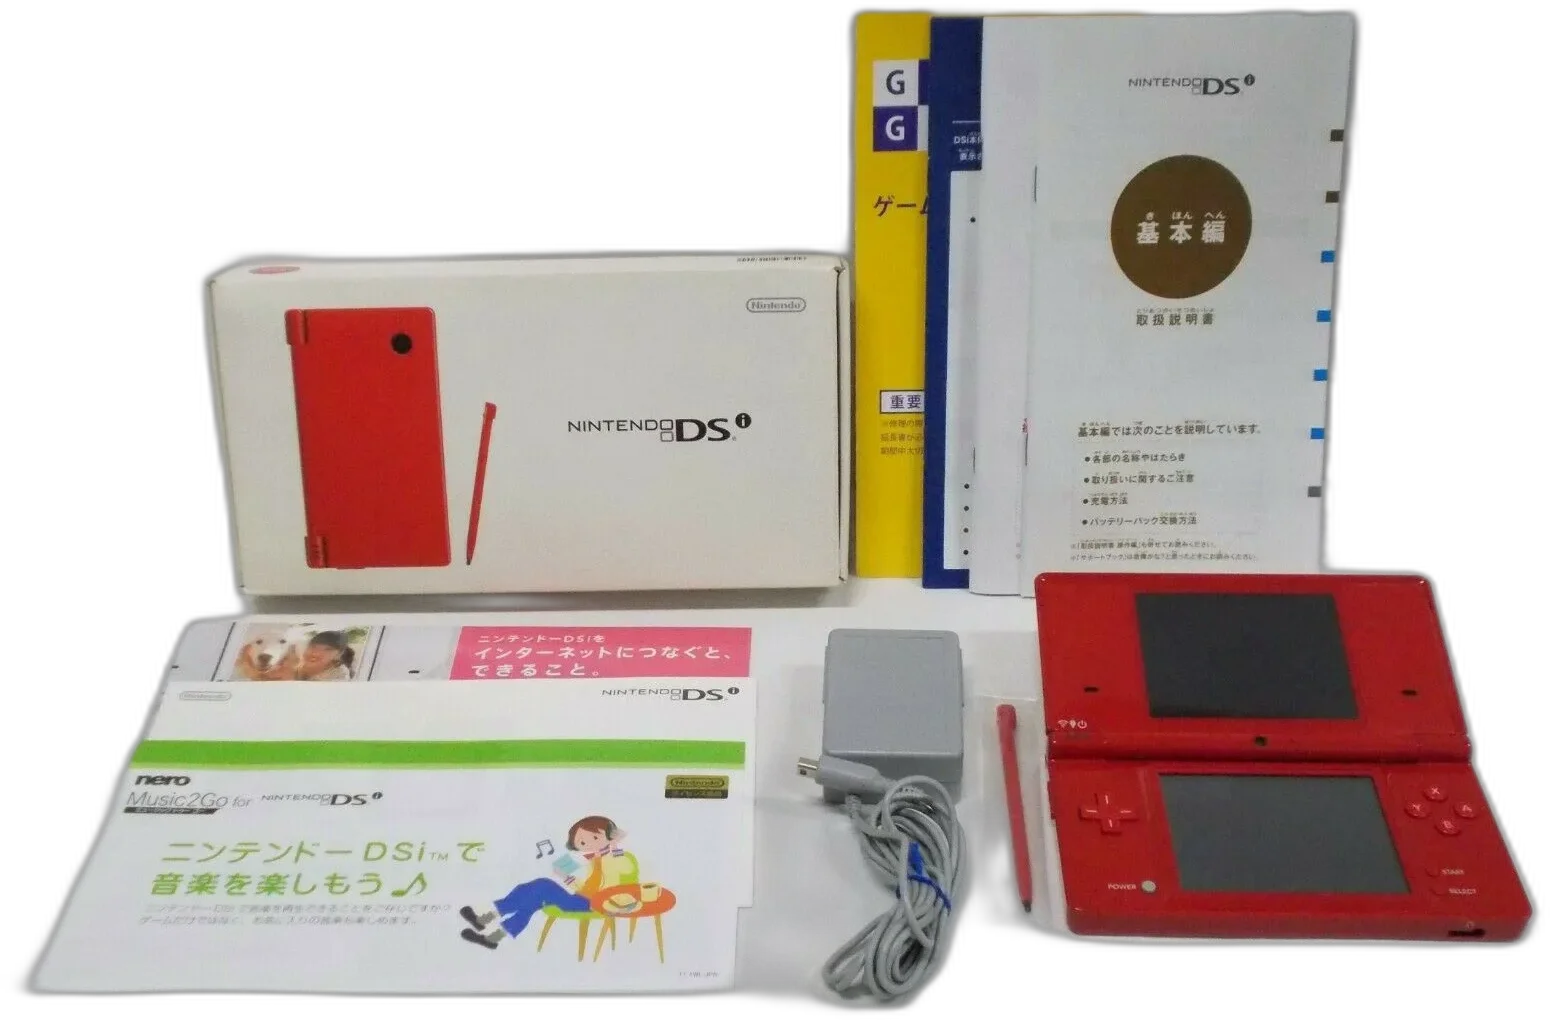  Nintendo DSi Red Console [JP]